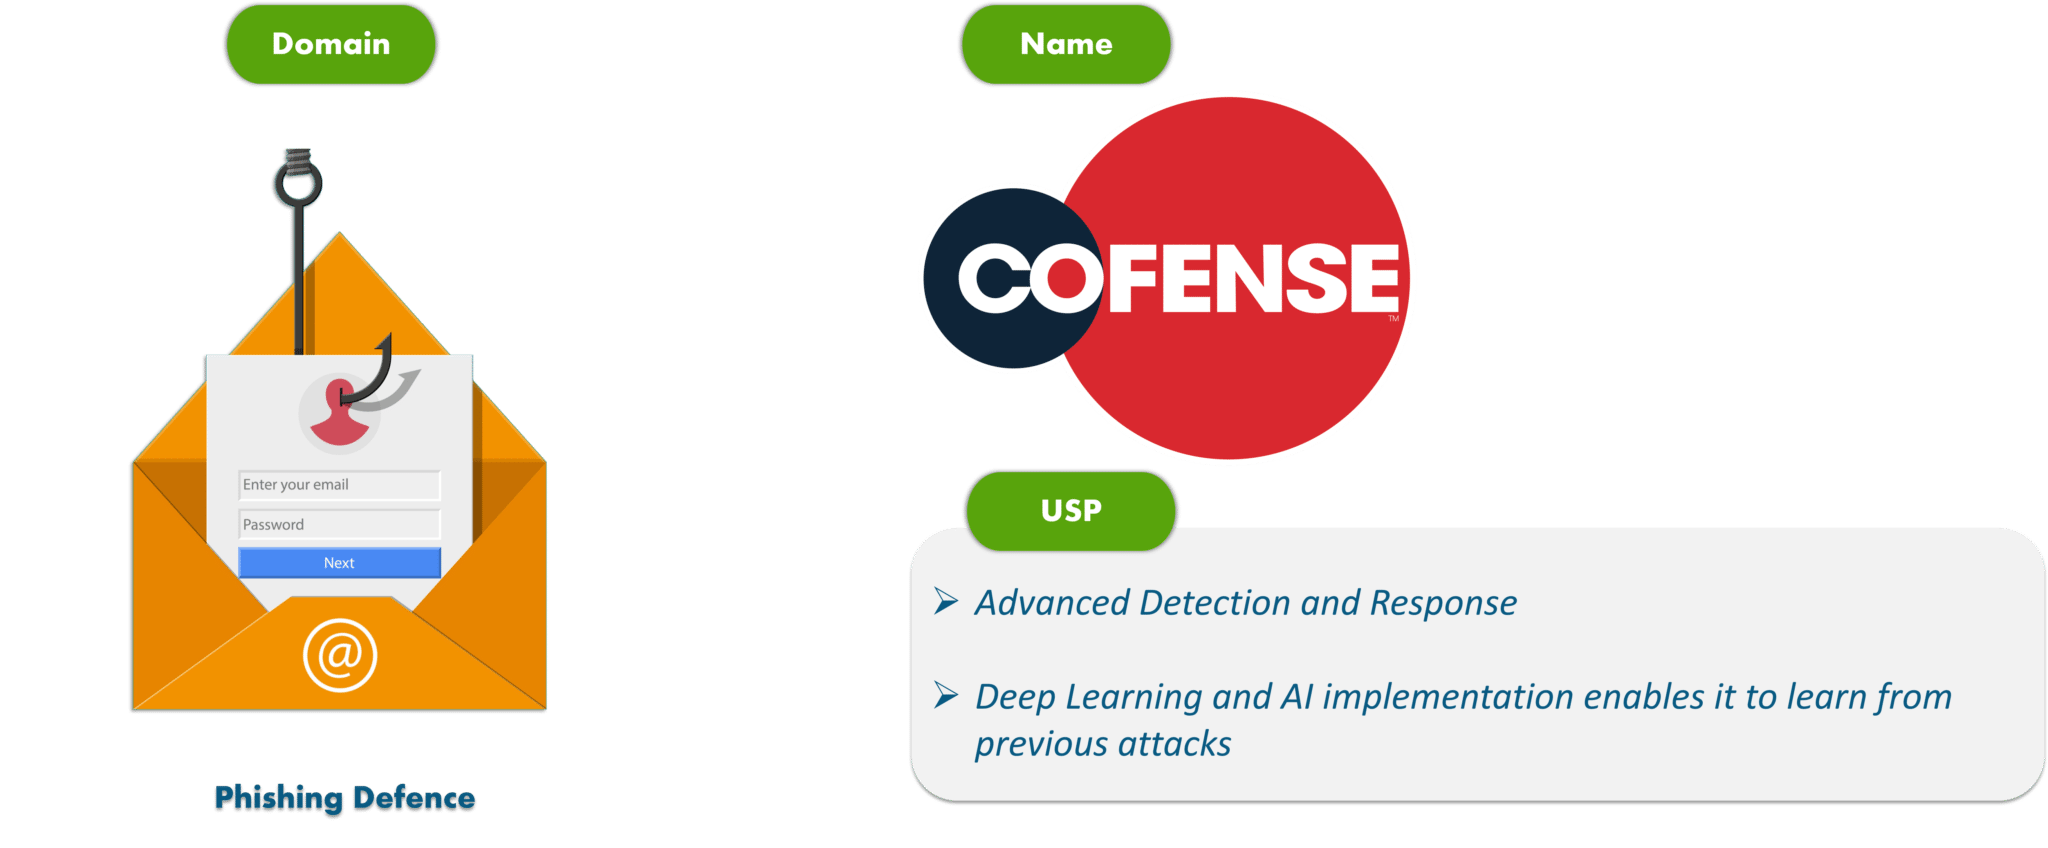 Cofense Triage - Cybersecurity Tools - Edureka